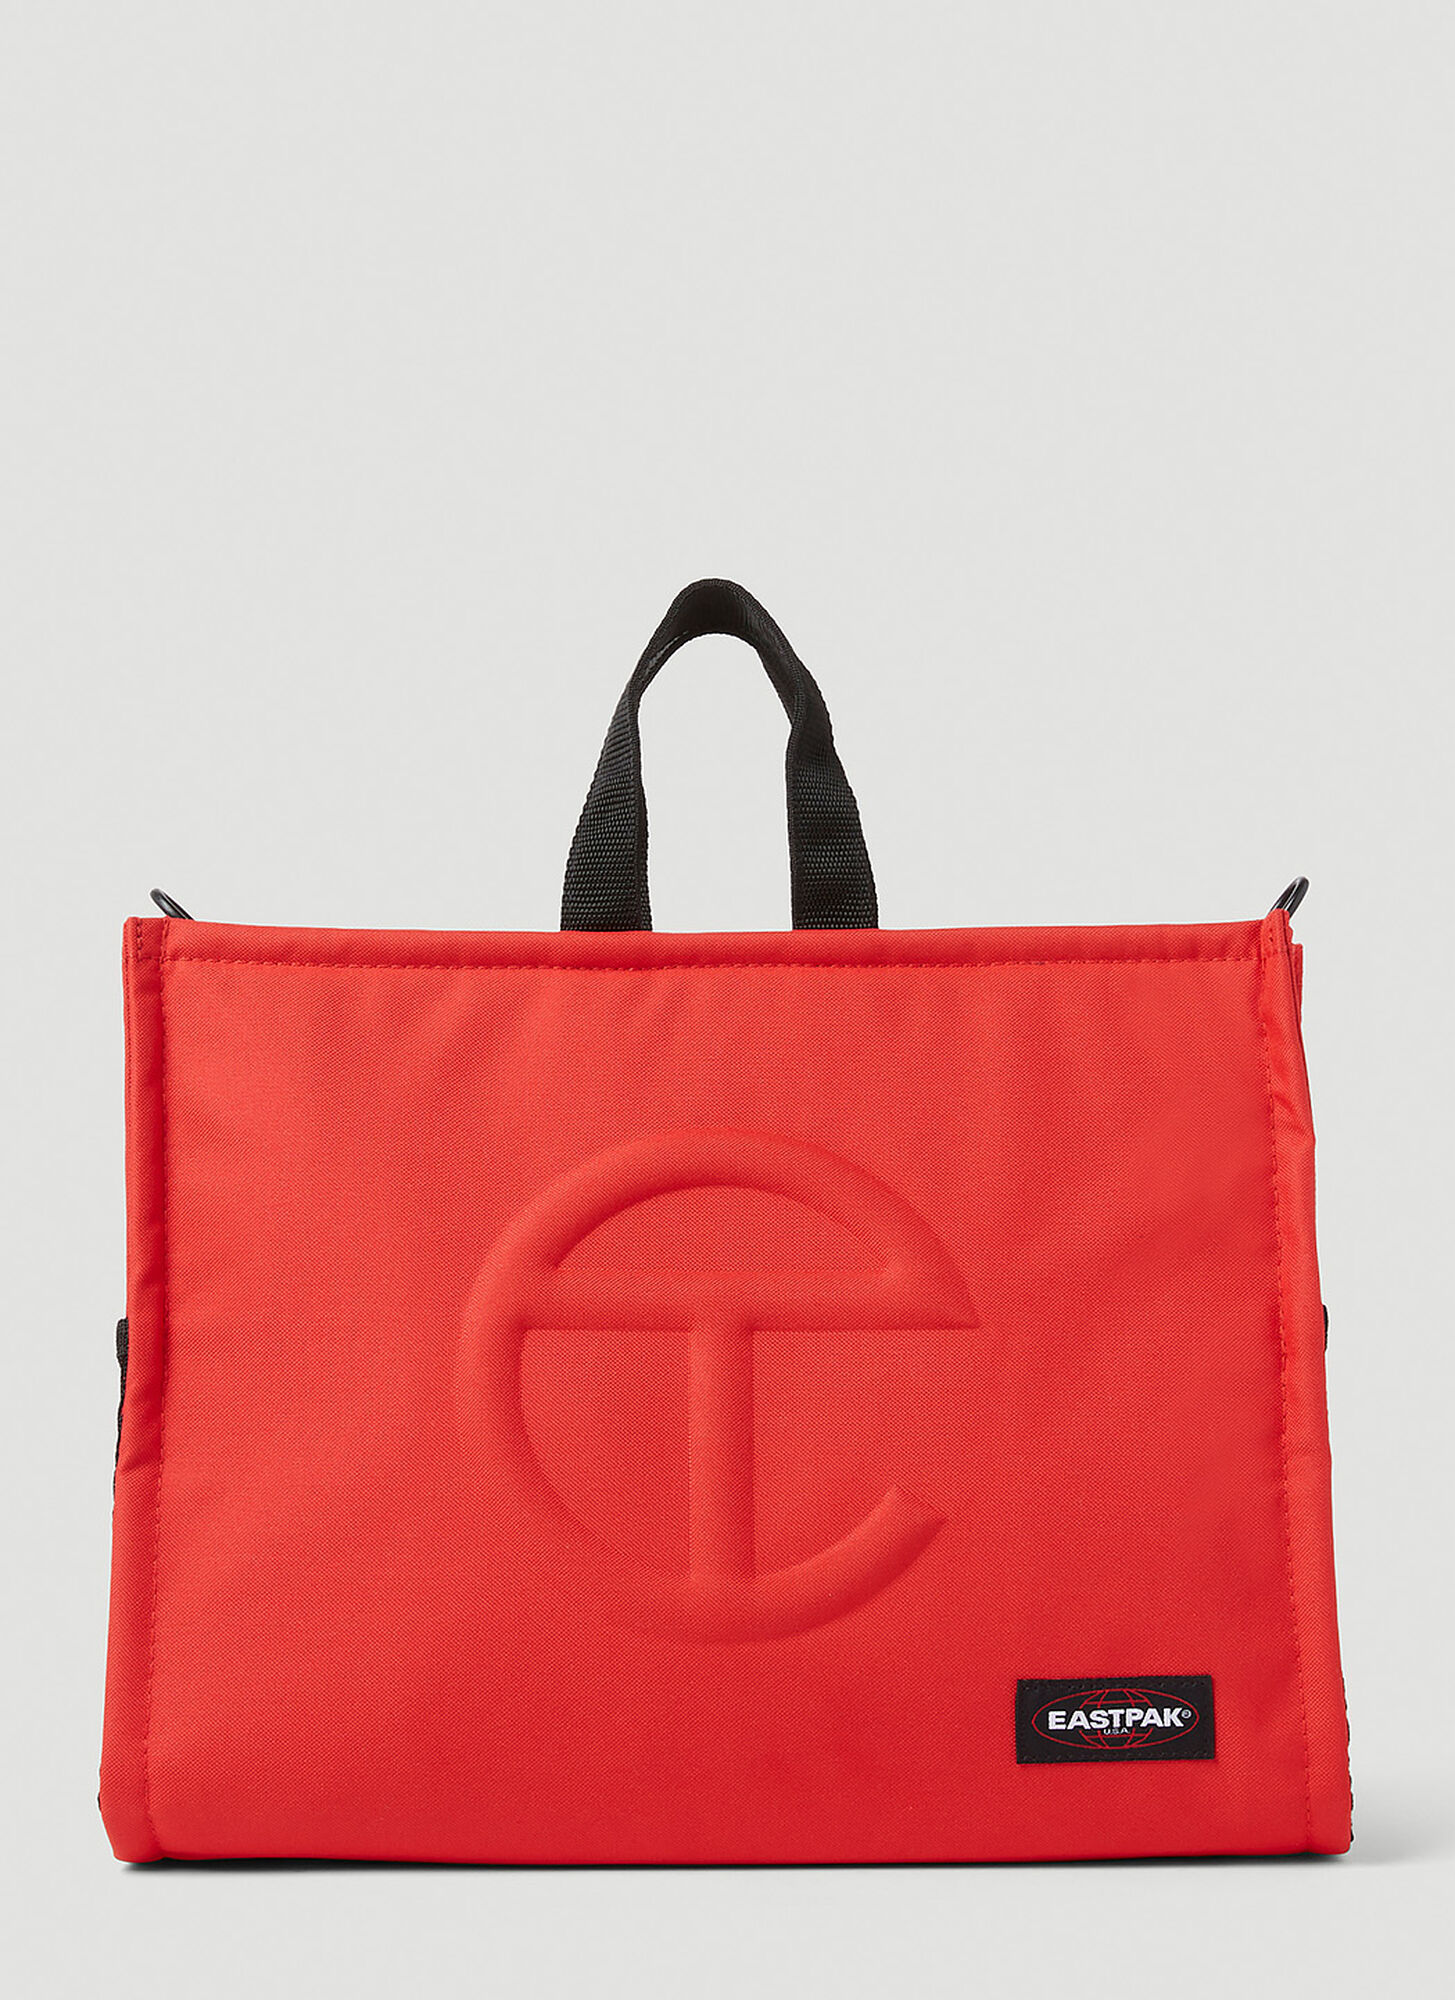 Eastpak X Telfar Shopper Convertible Medium Tote Bag Unisex Red